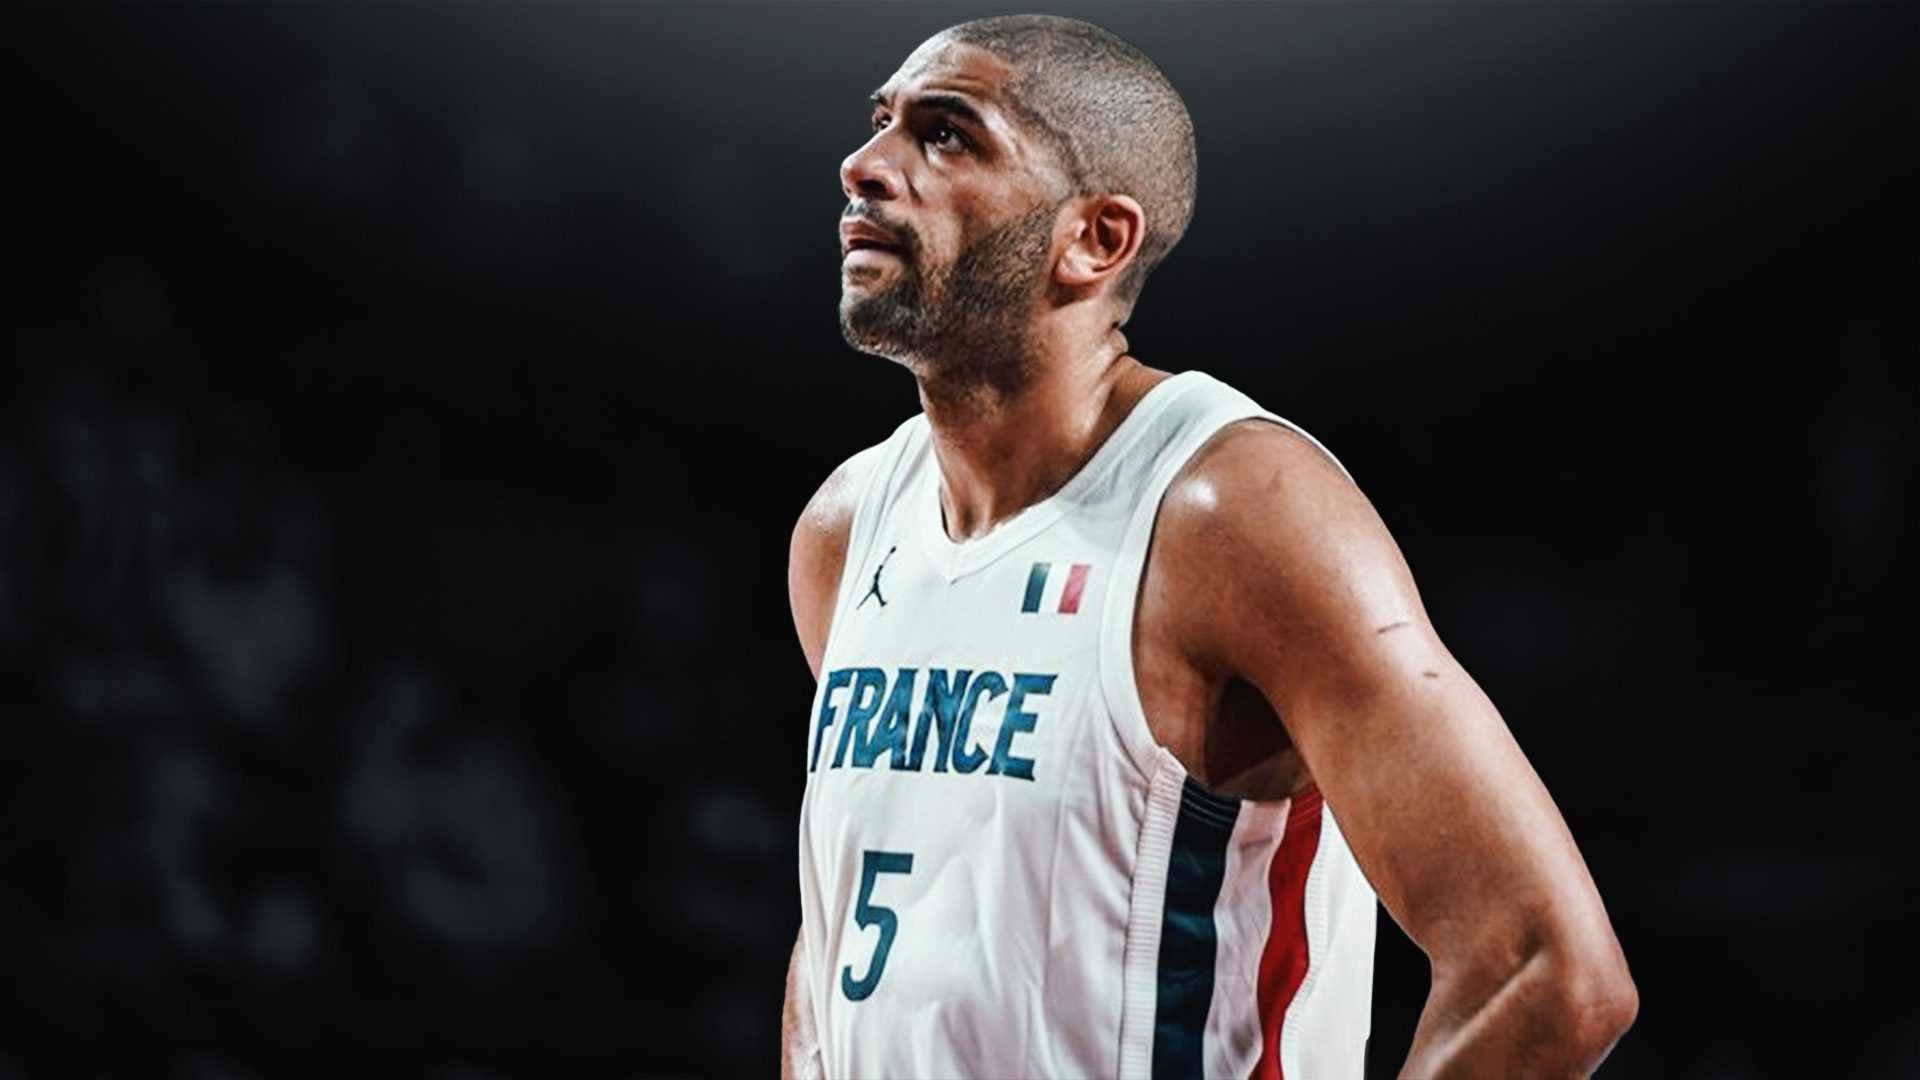 Nicolas Batum Reacts to France’s Shock FIBA Elimination